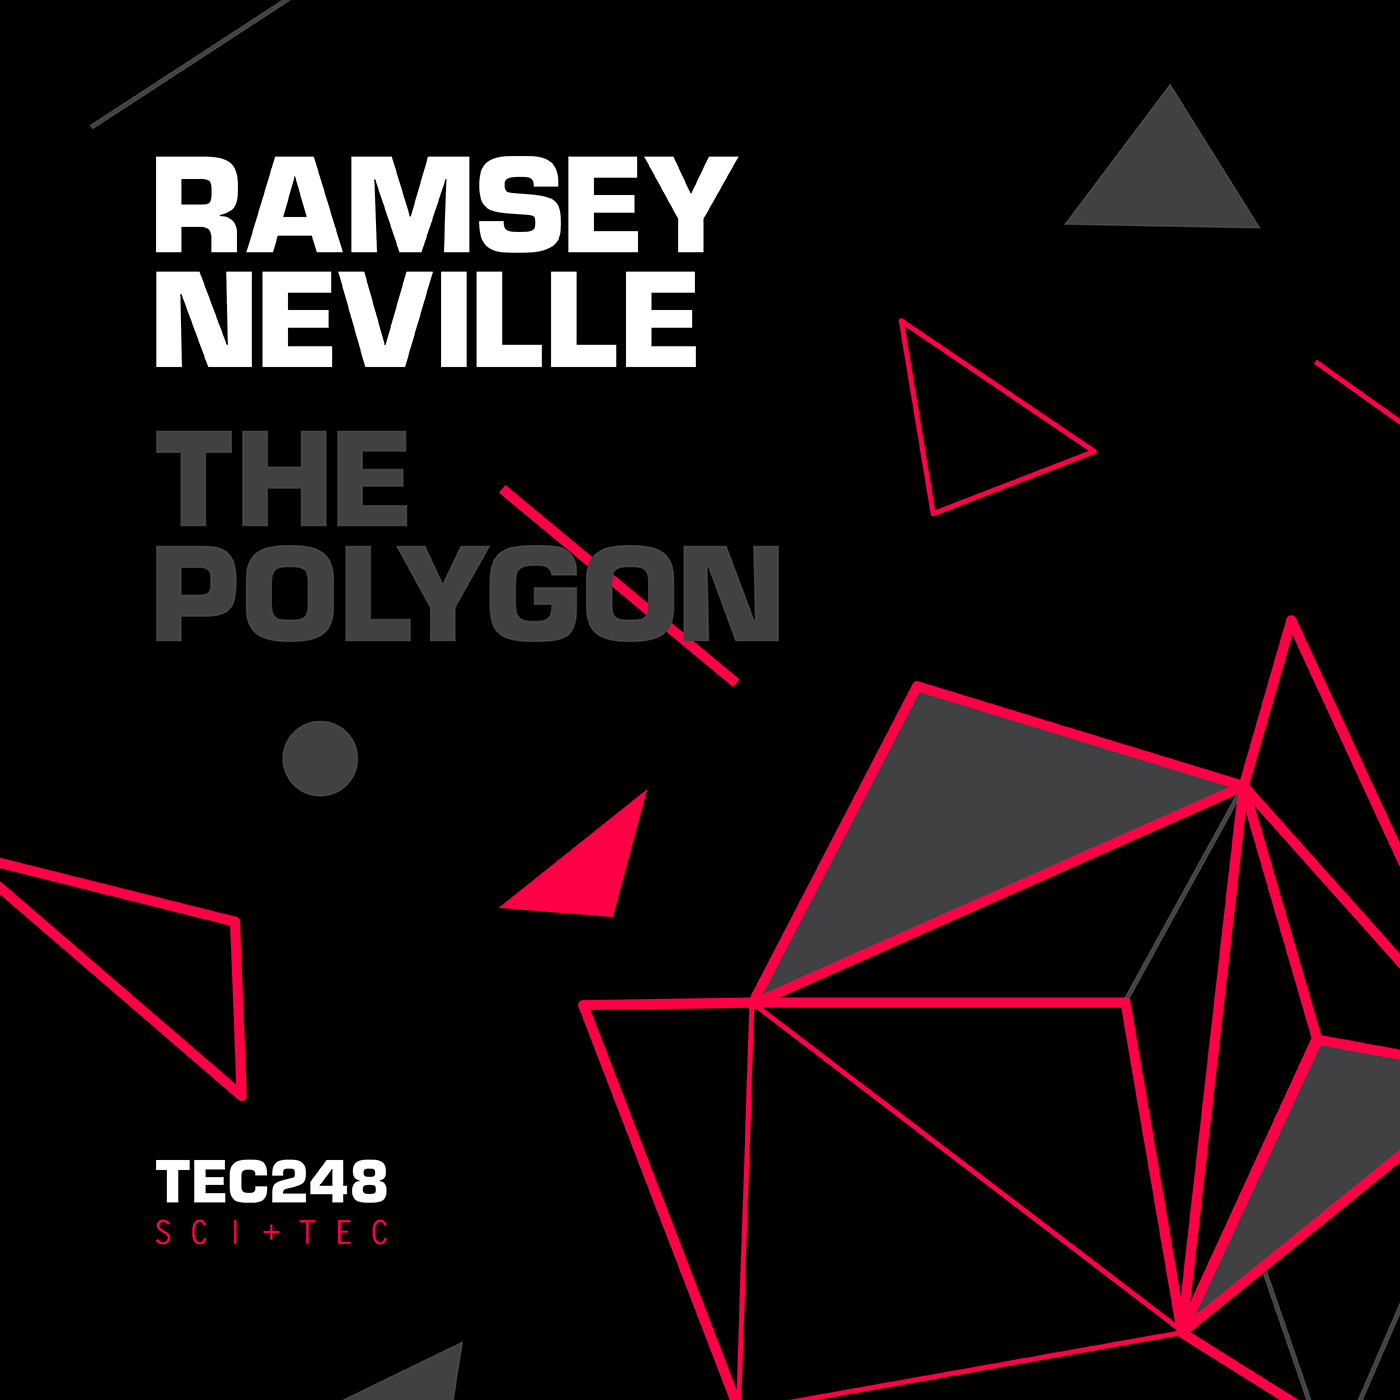 The Polygon Ramsey Neville